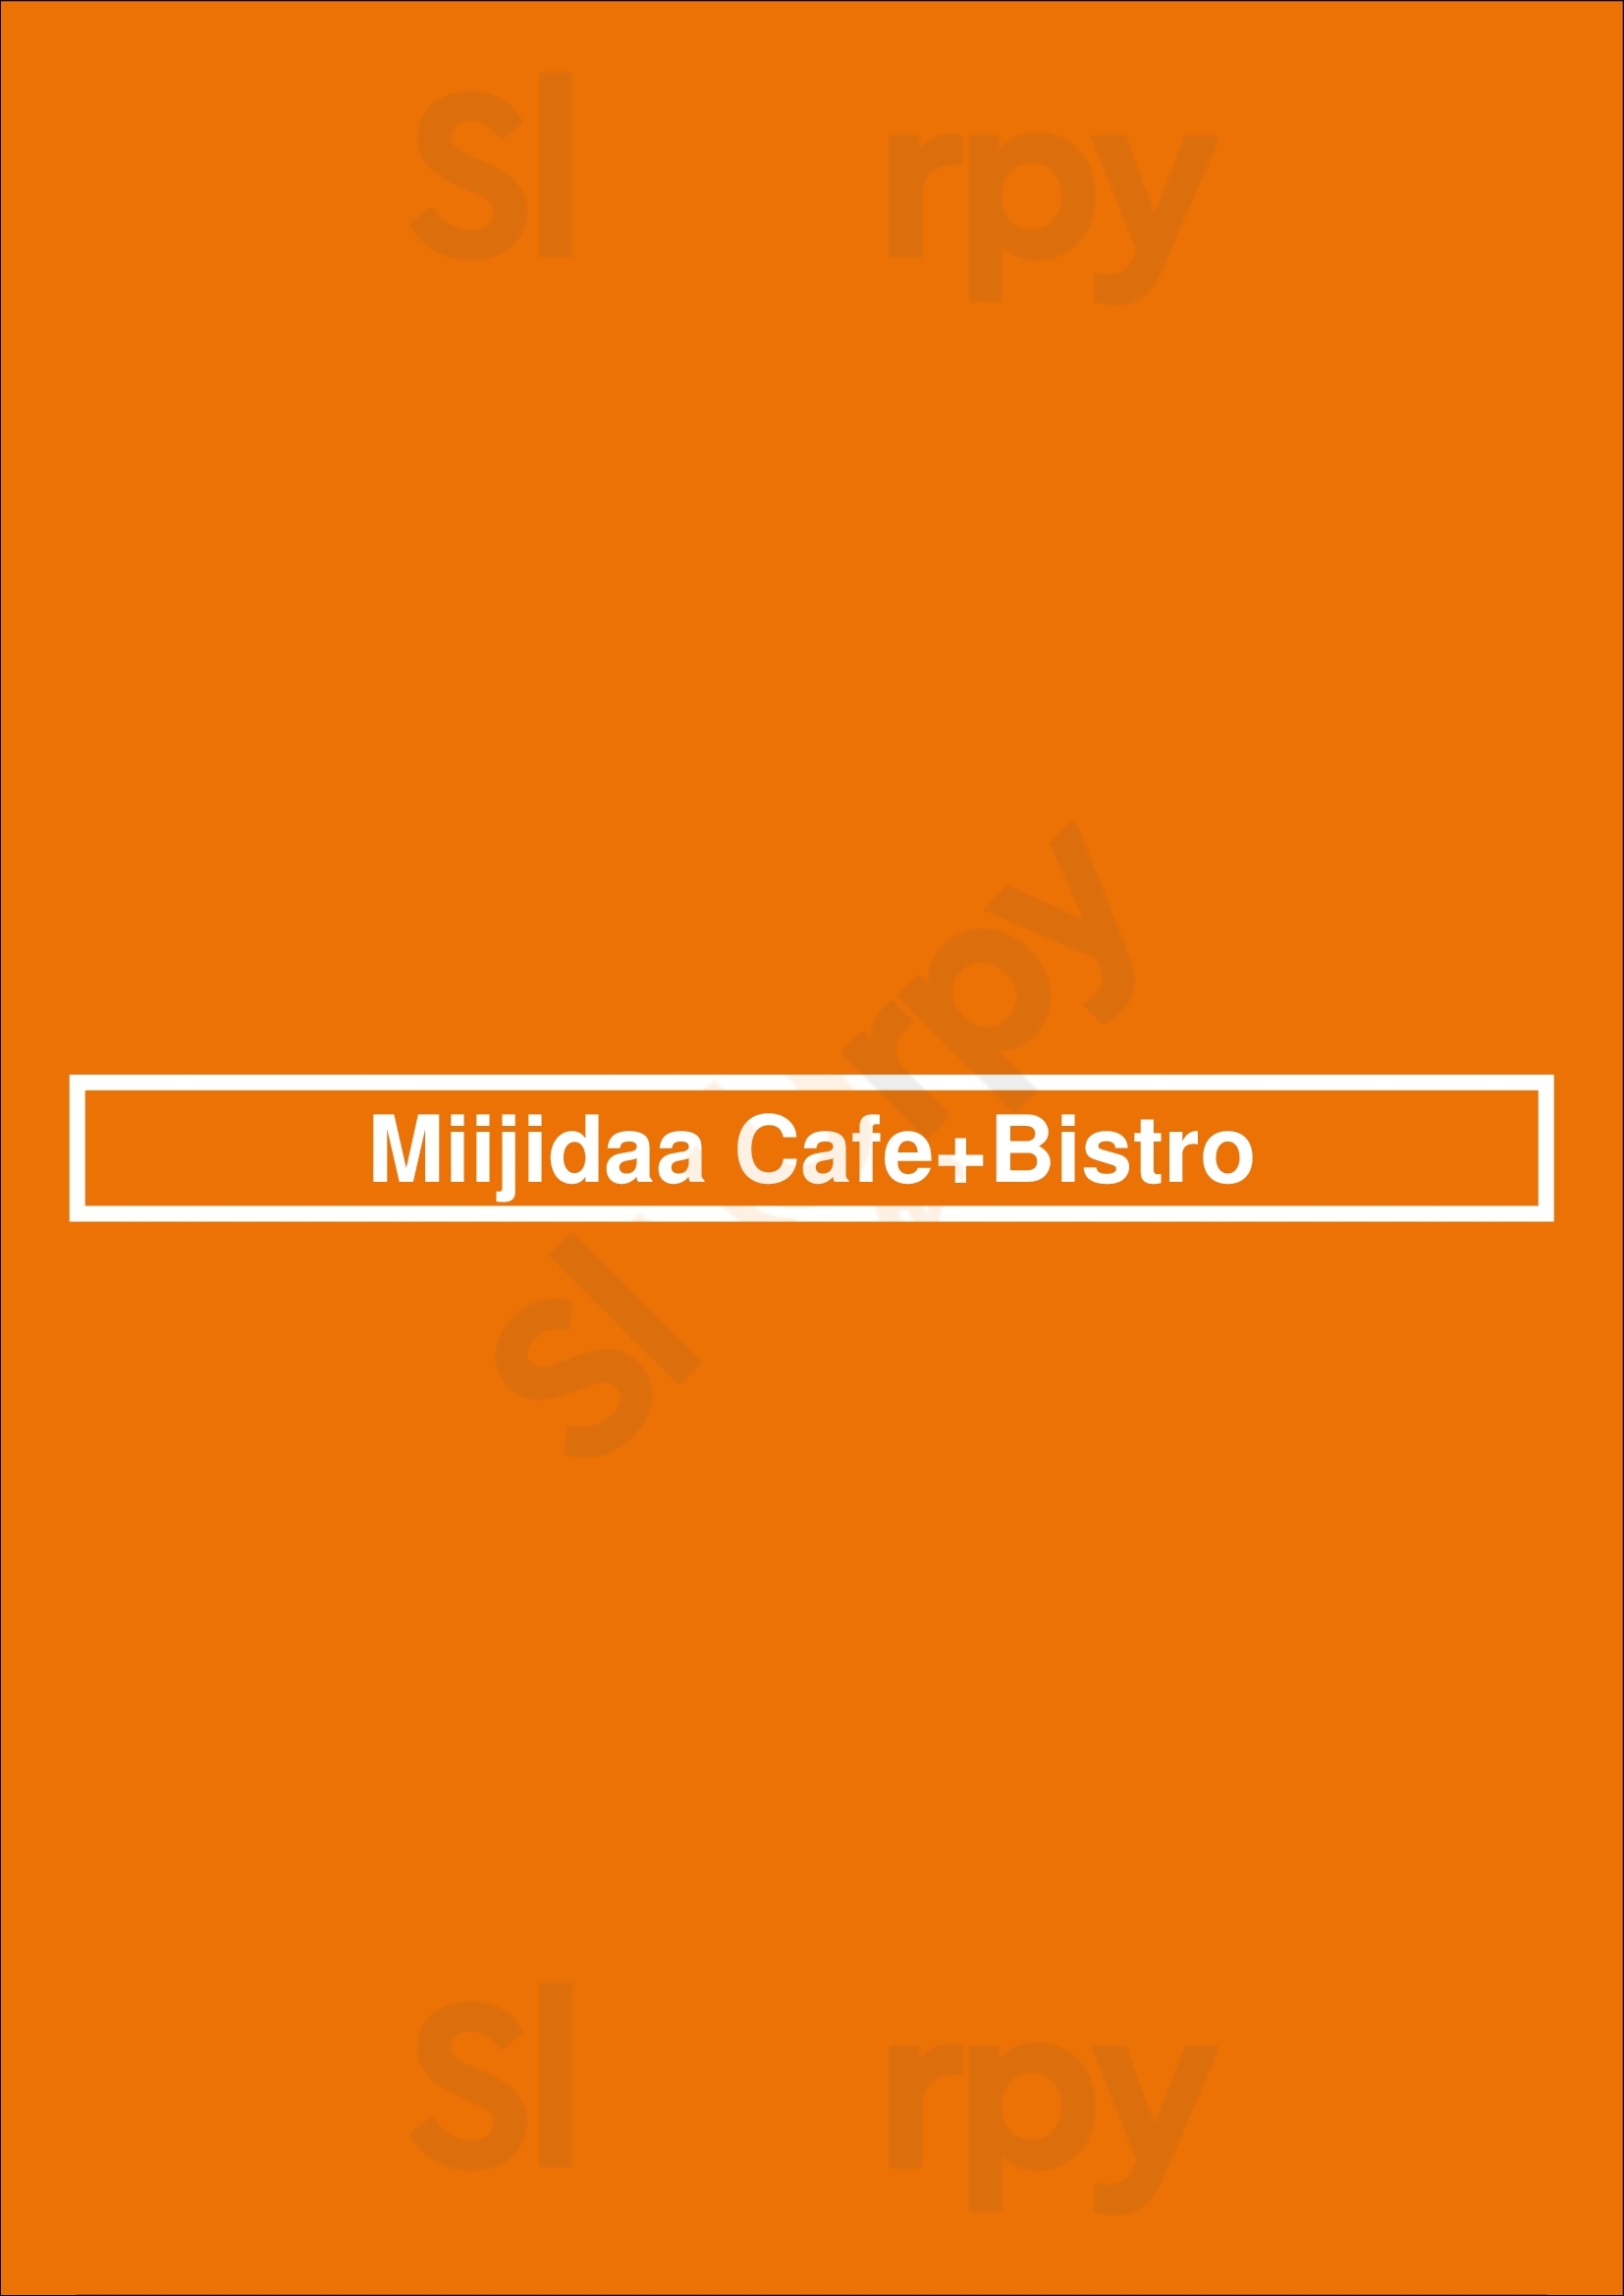 Miijidaa Cafe+bistro Guelph Menu - 1